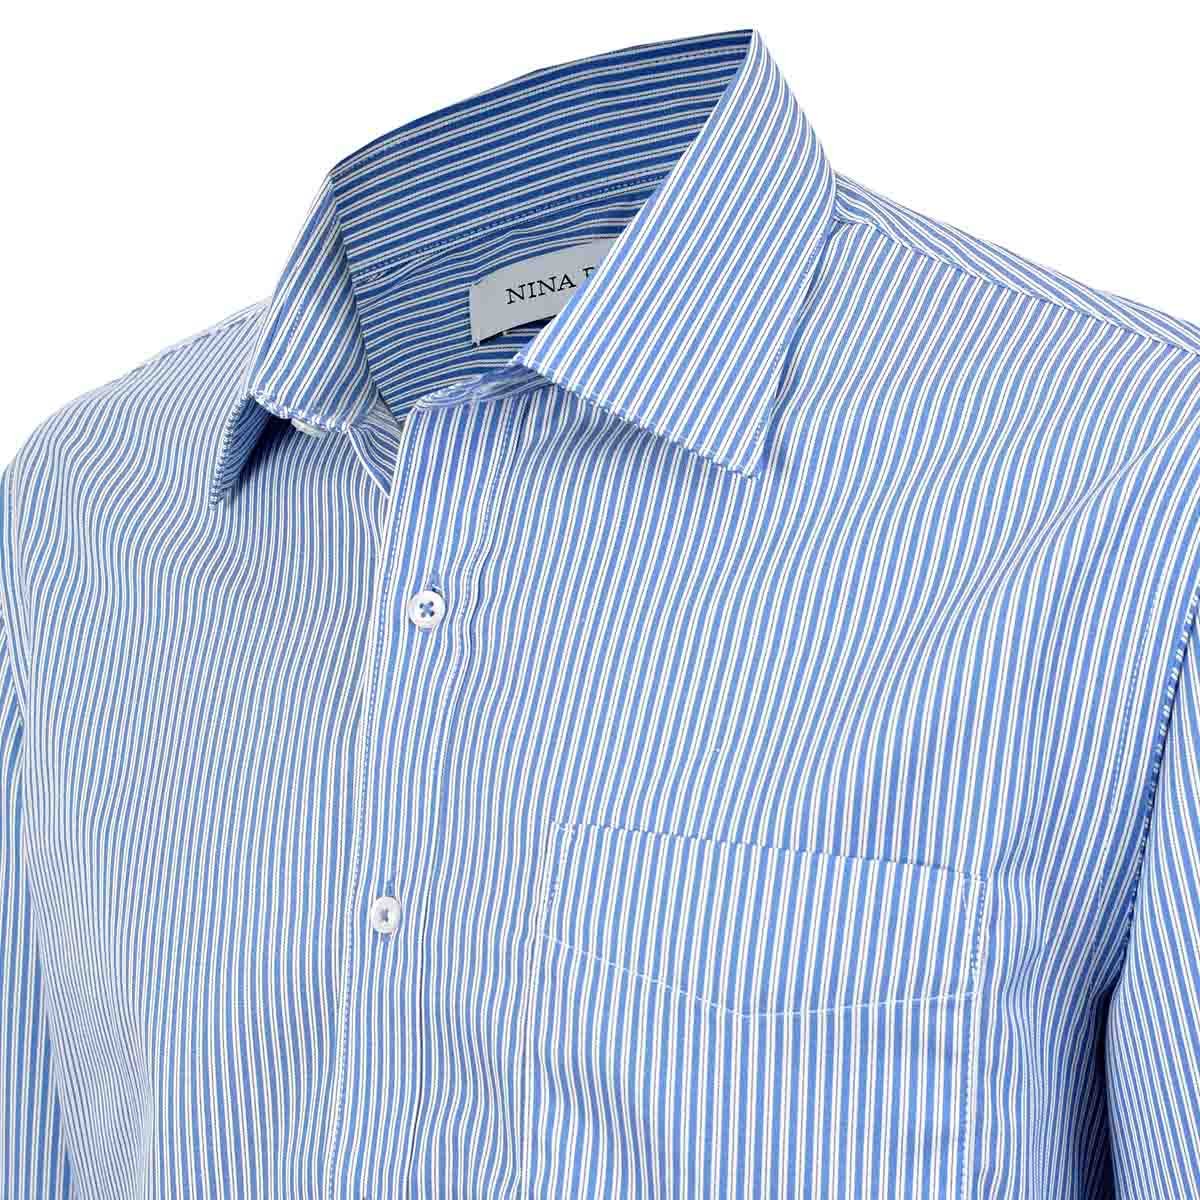 Camisa de Vestir Regular  Color Azul Combinado Nina Ricci para Caballero